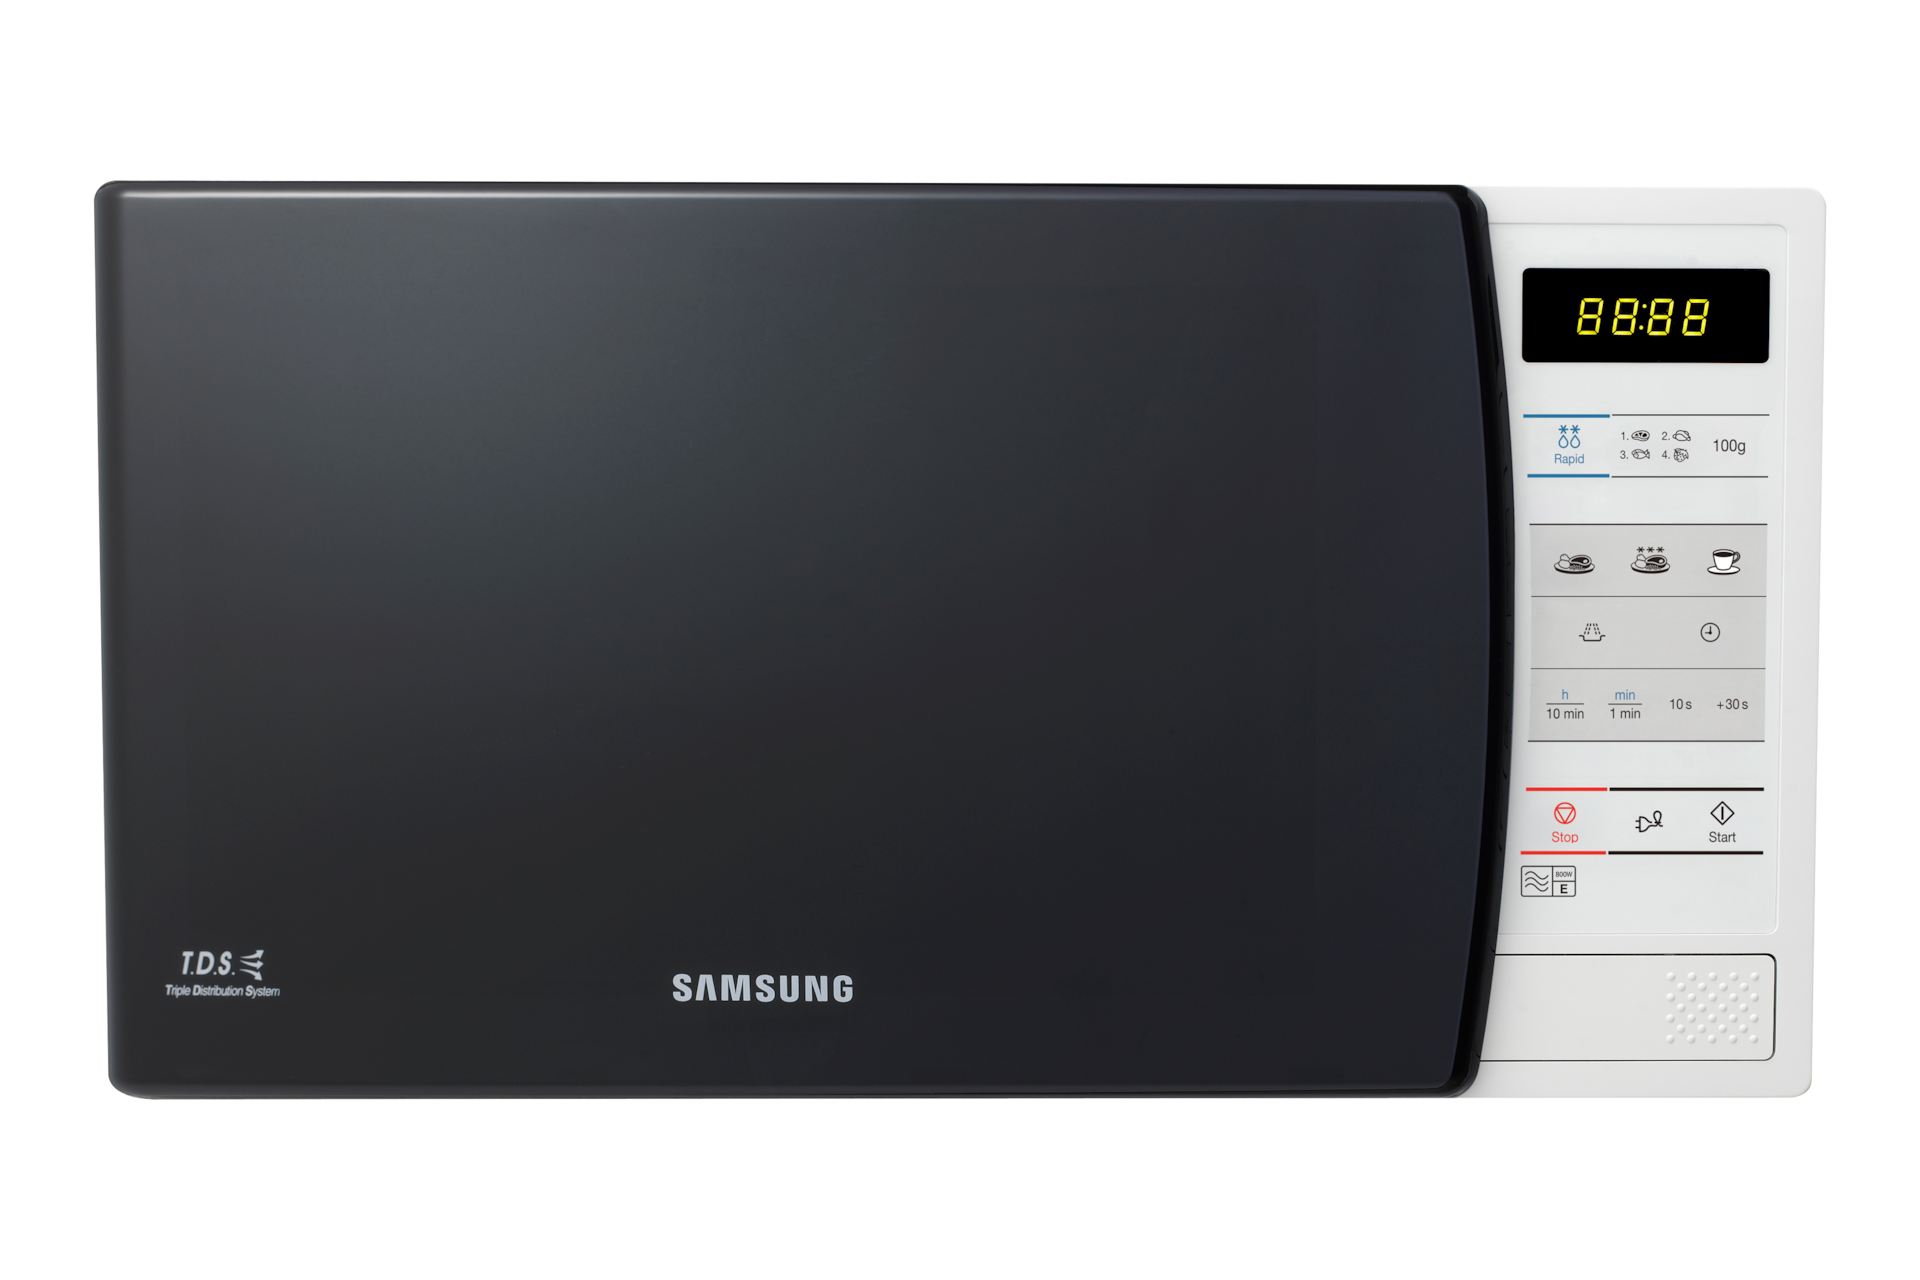 Cara Menggunakan Microwave Samsung Me731k - malaysnea